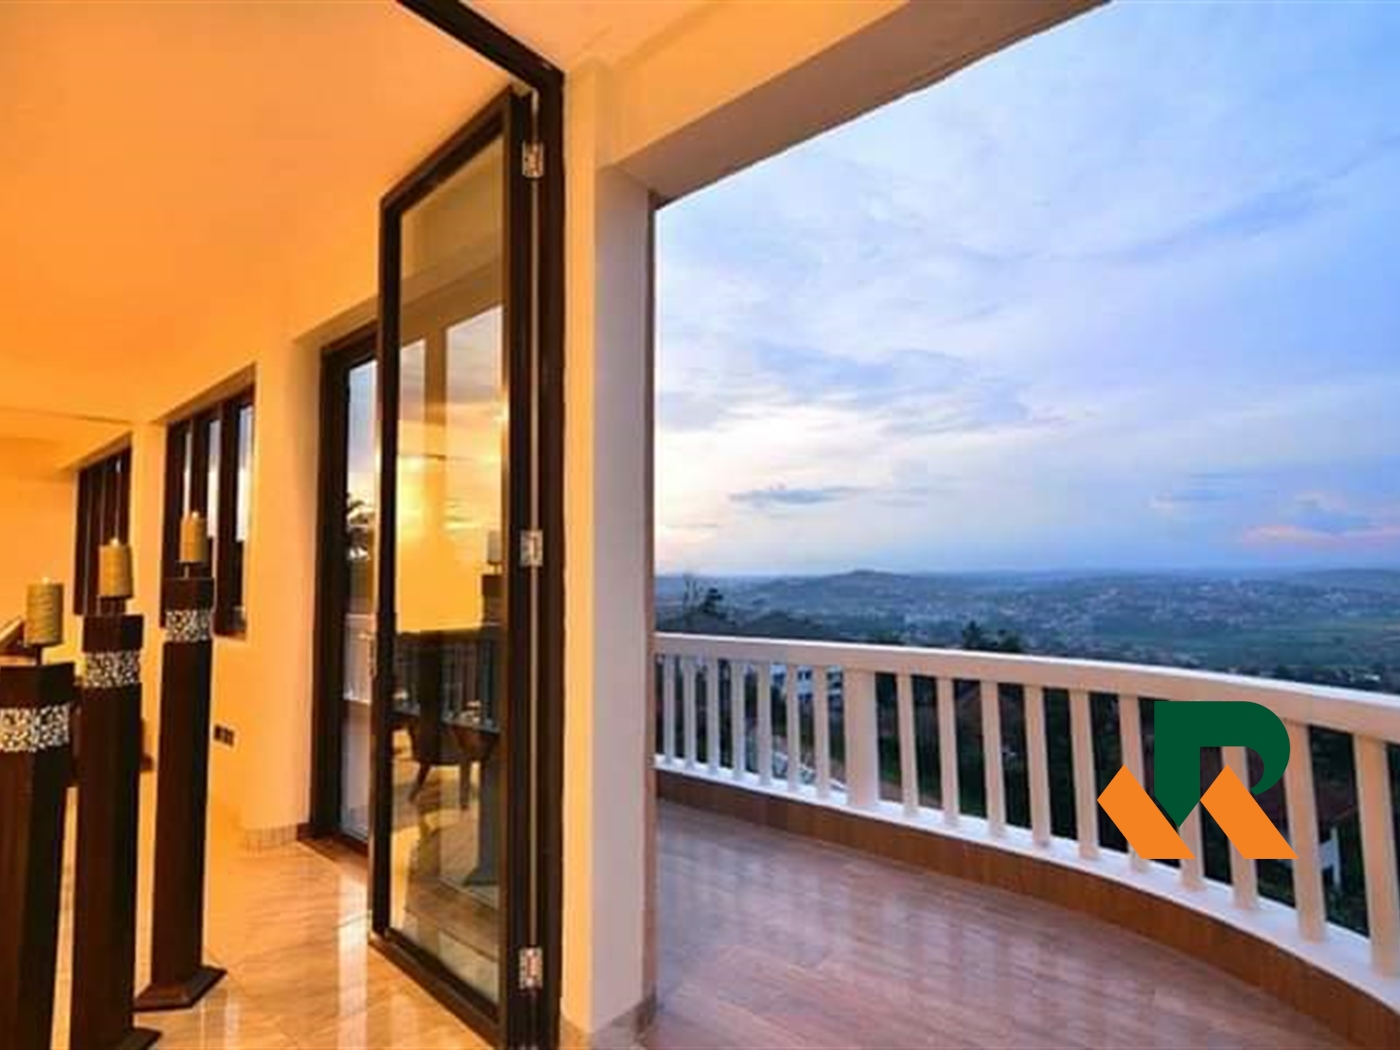 Penthouse for rent in Naguru Kampala